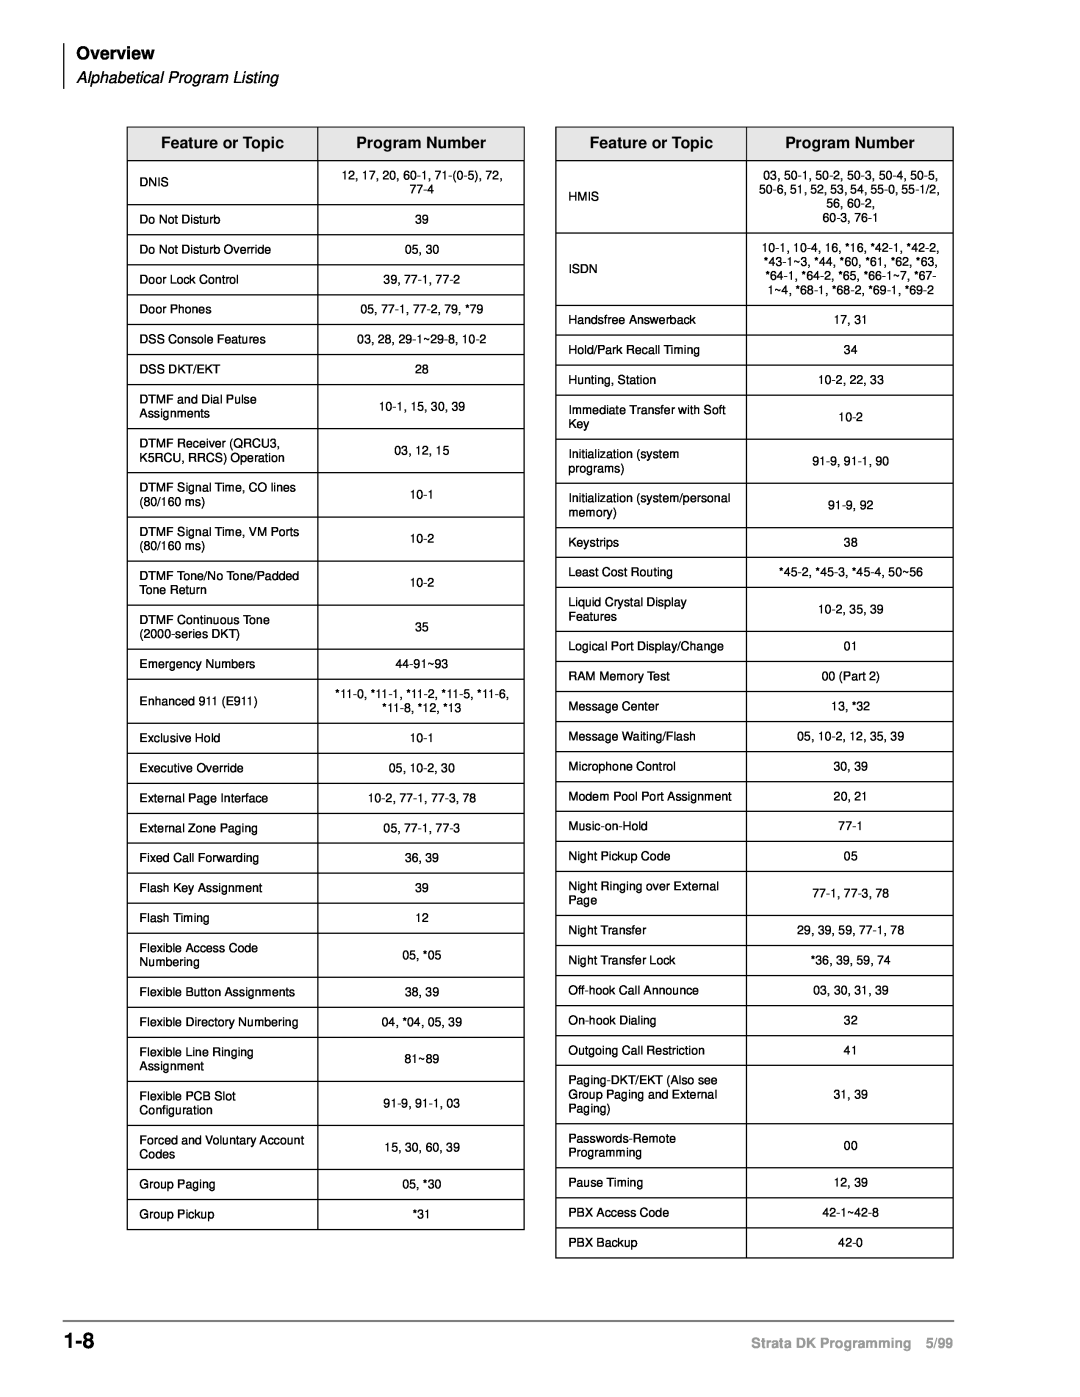 Toshiba dk14 manual Overview, Alphabetical Program Listing, Strata DK Programming 5/99, Dnis 